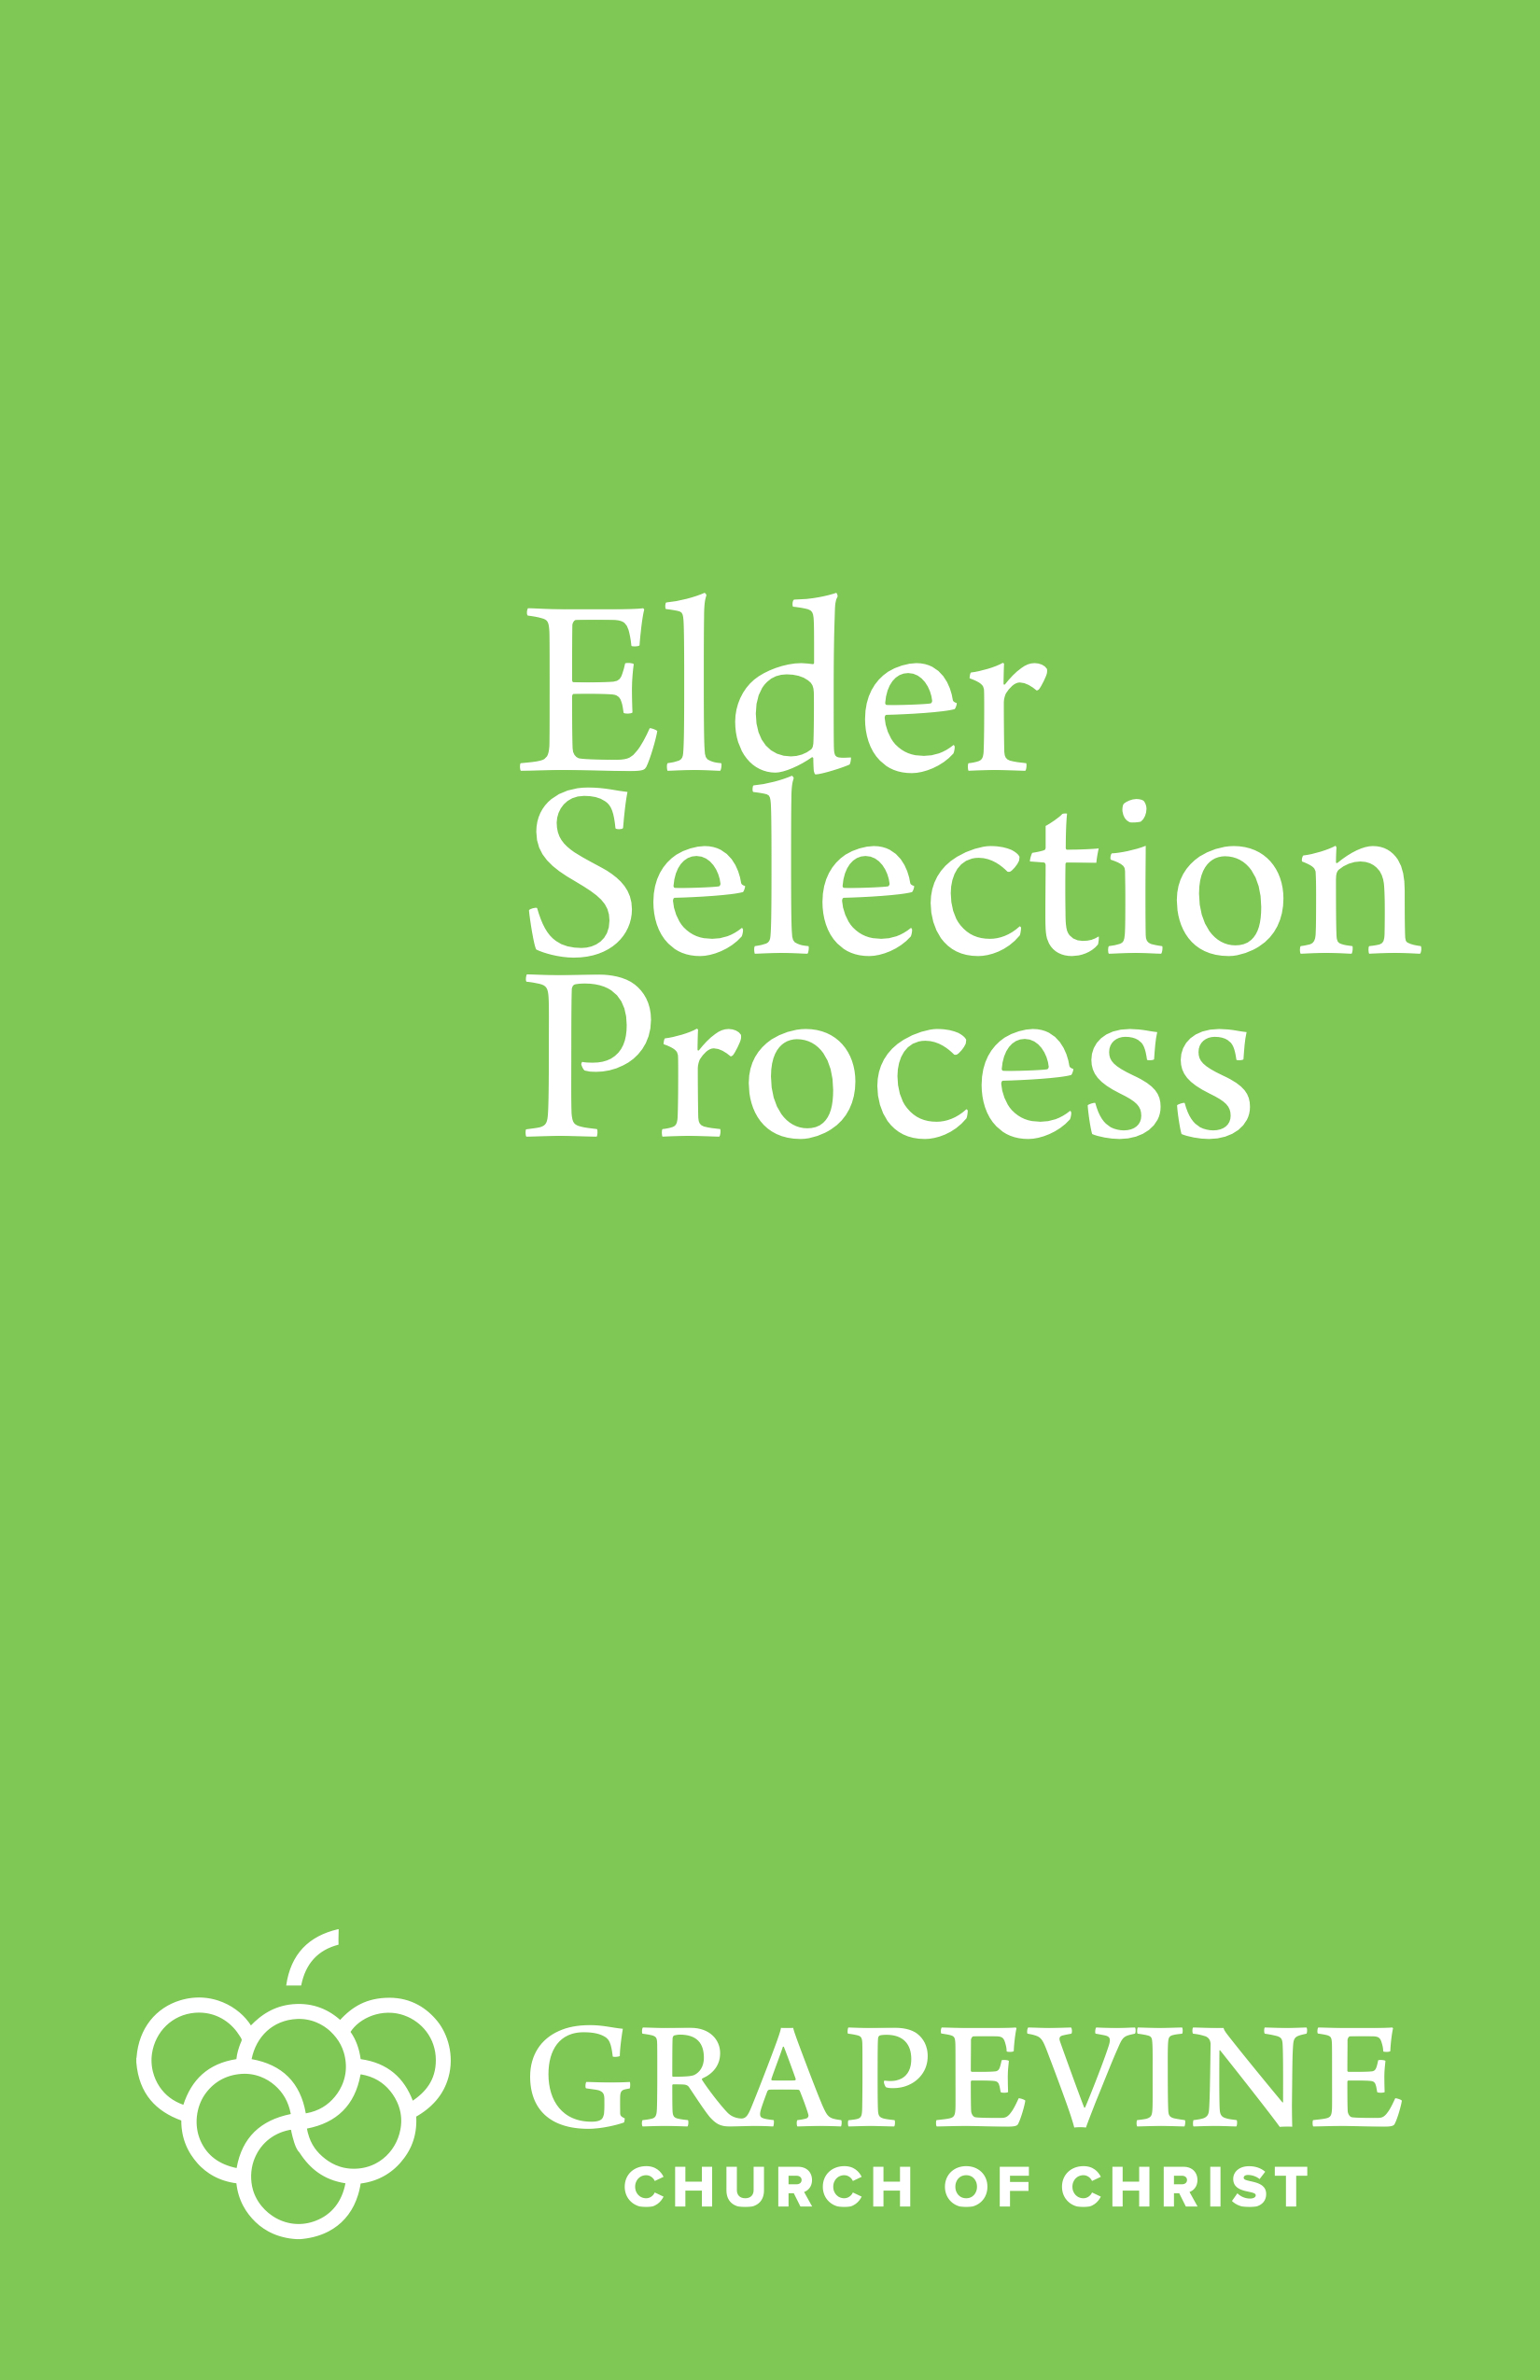 elder-selection-document3-001